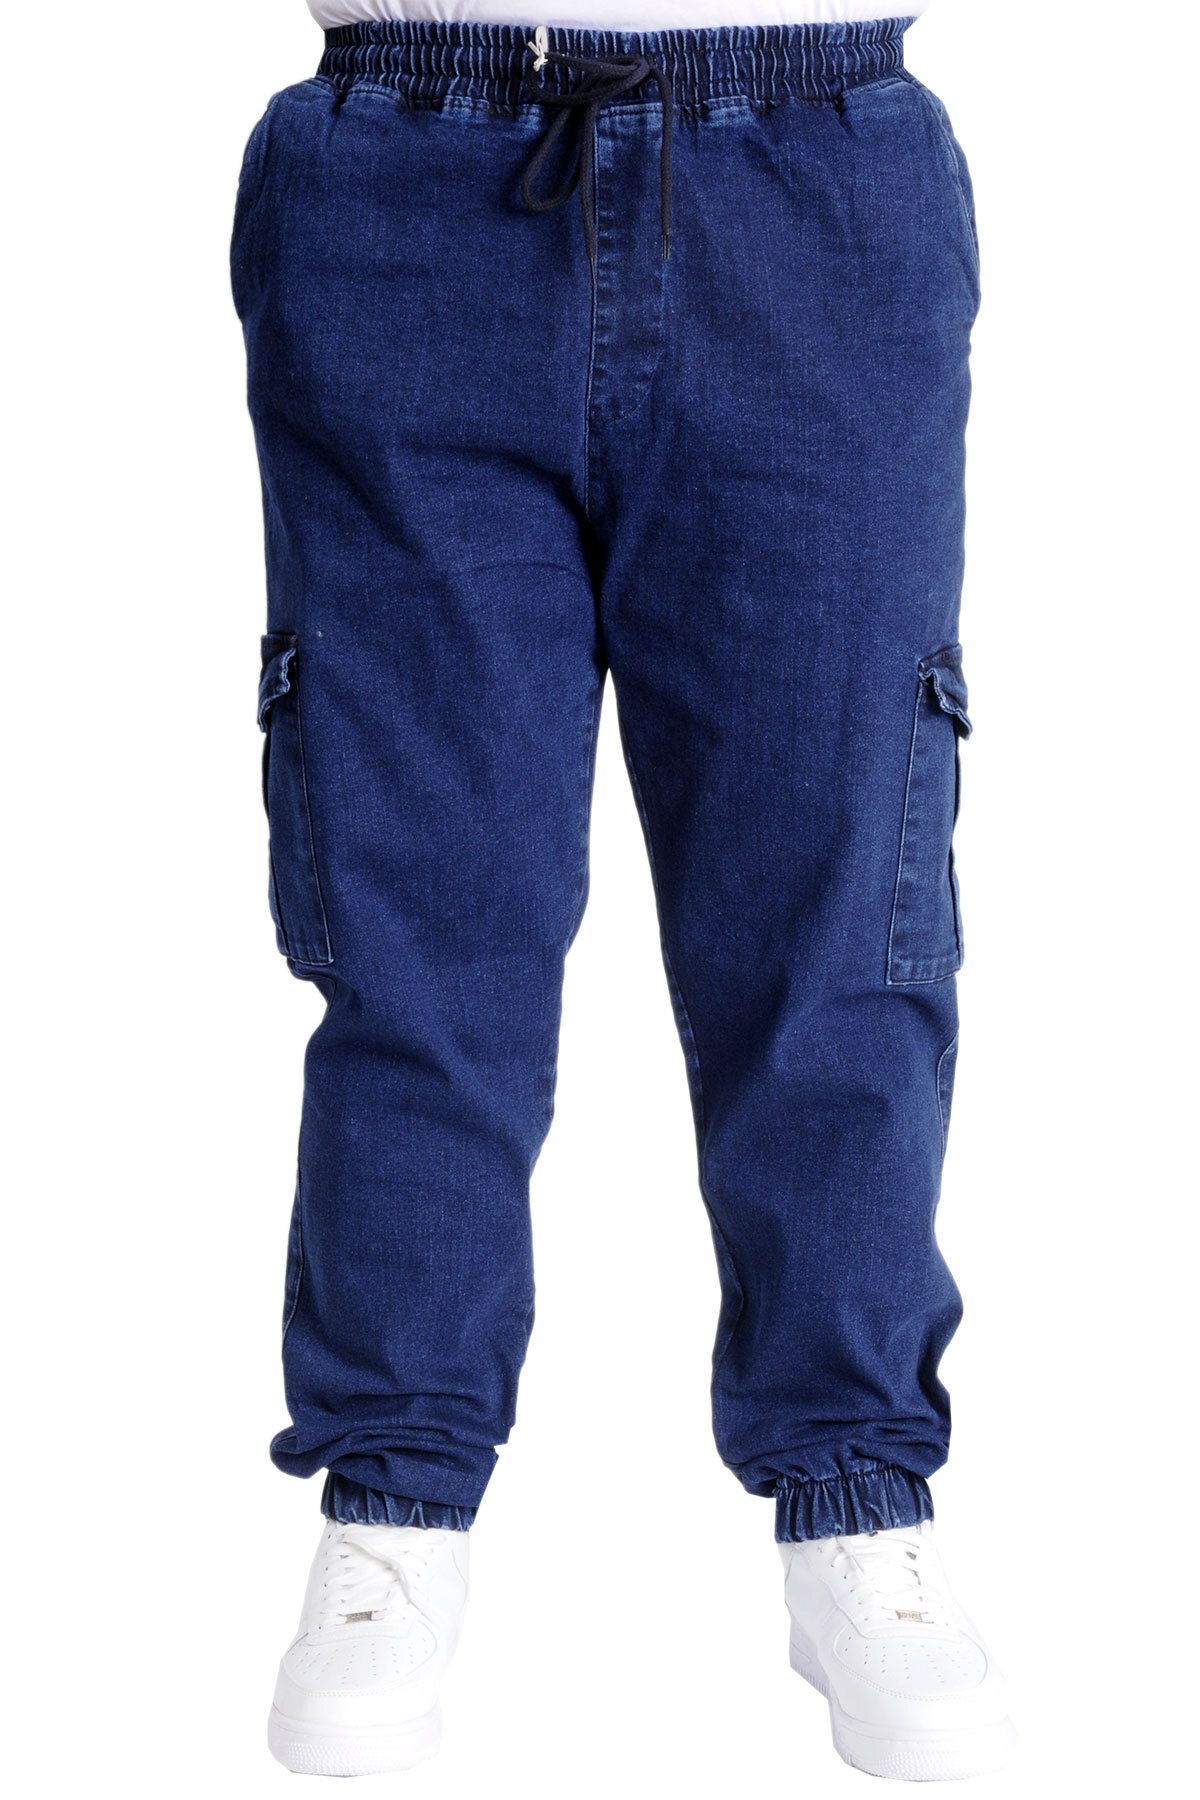 Modexl Mode XL Battal Beden Erkek Kot Pantolon CHIEF BLUE Lastikli 23919 Lacivert